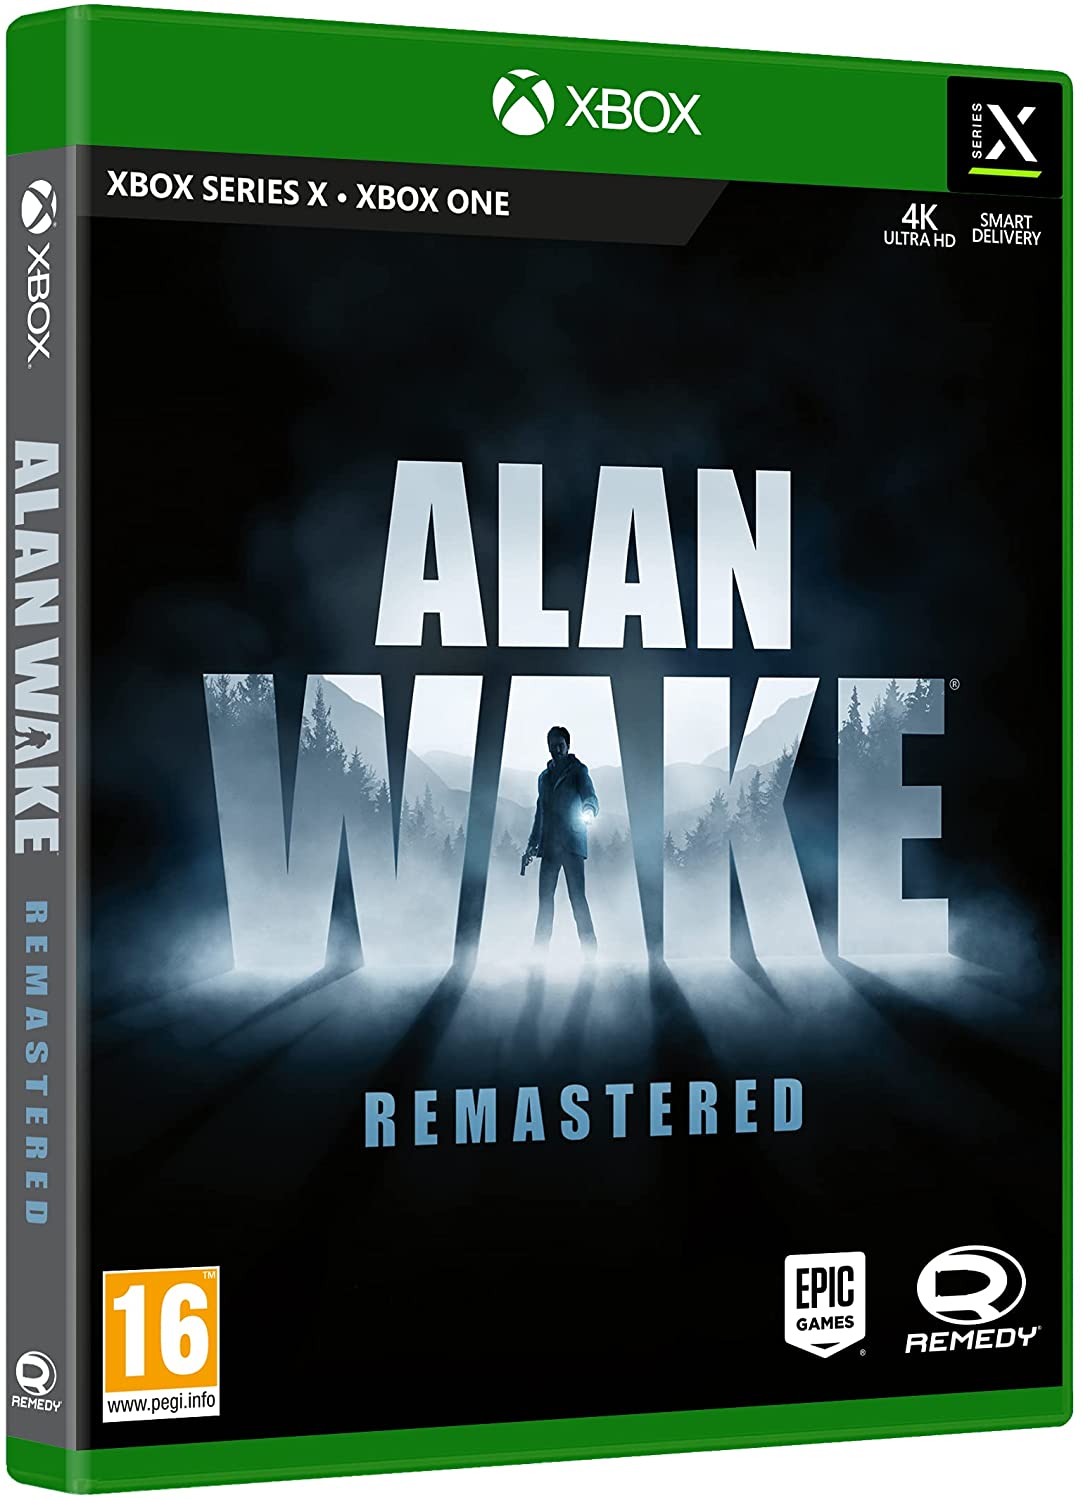 Alan Wake free instals